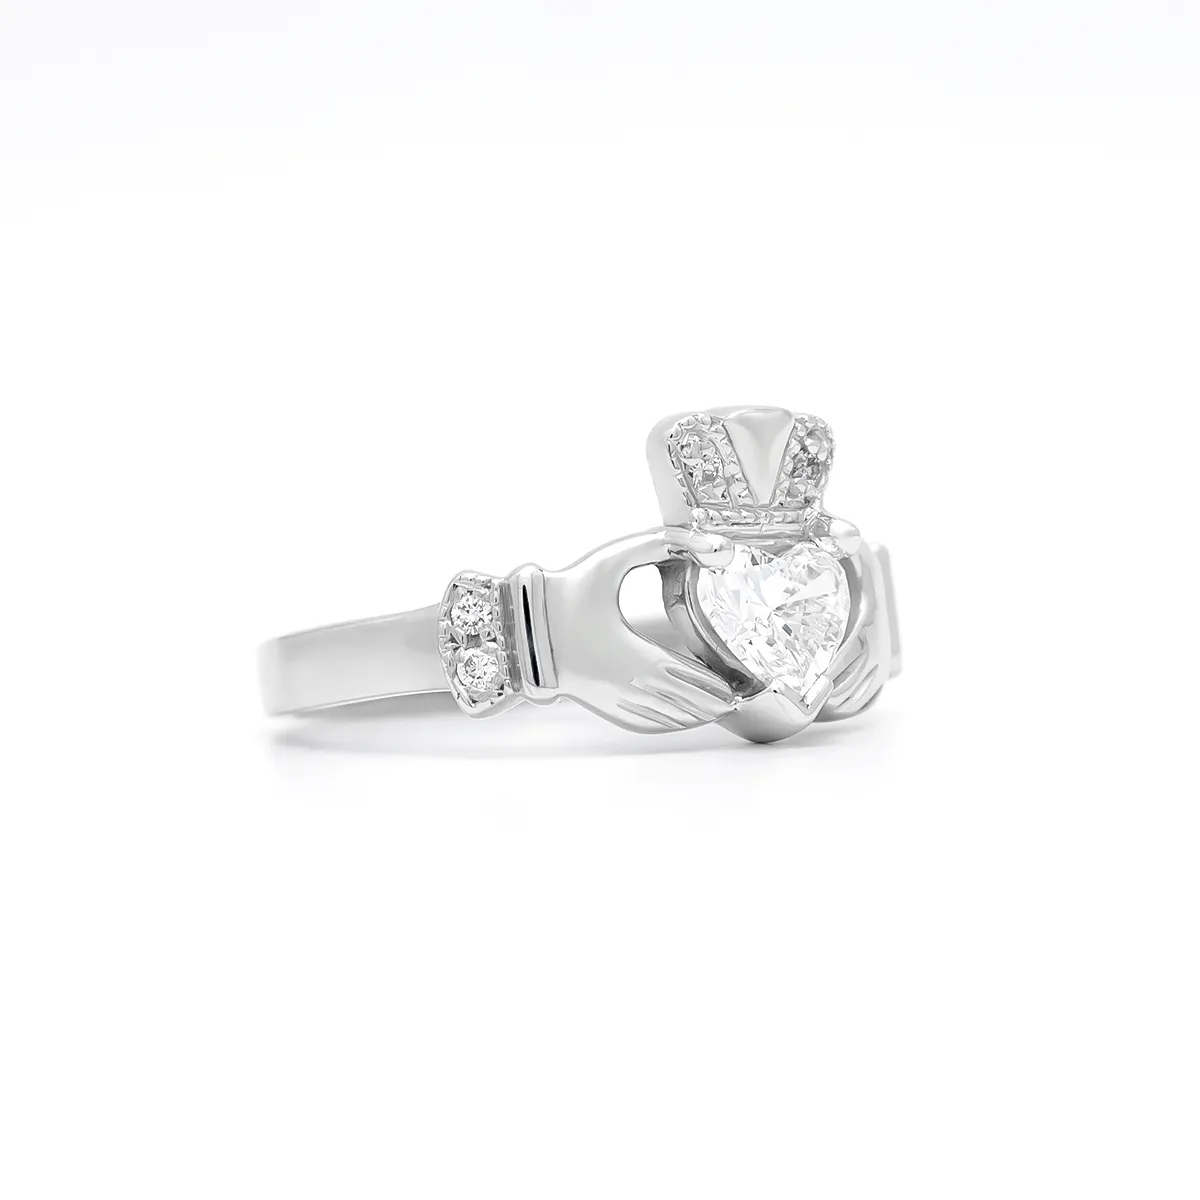 IJCR0037 Diamond White Gold Claddagh Ring 2...